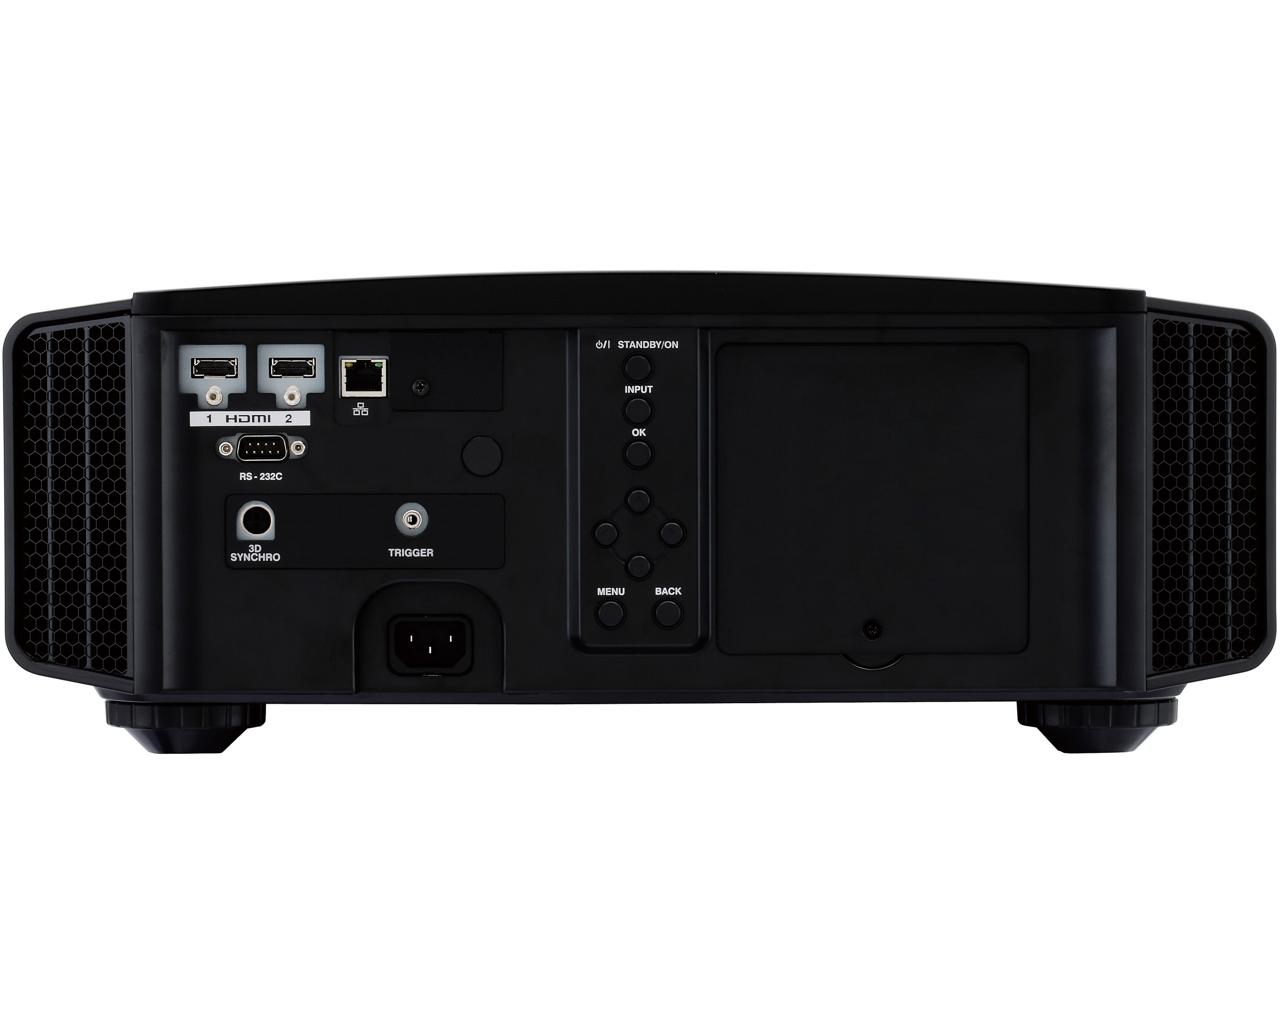 JVC DLA-X7900BE black